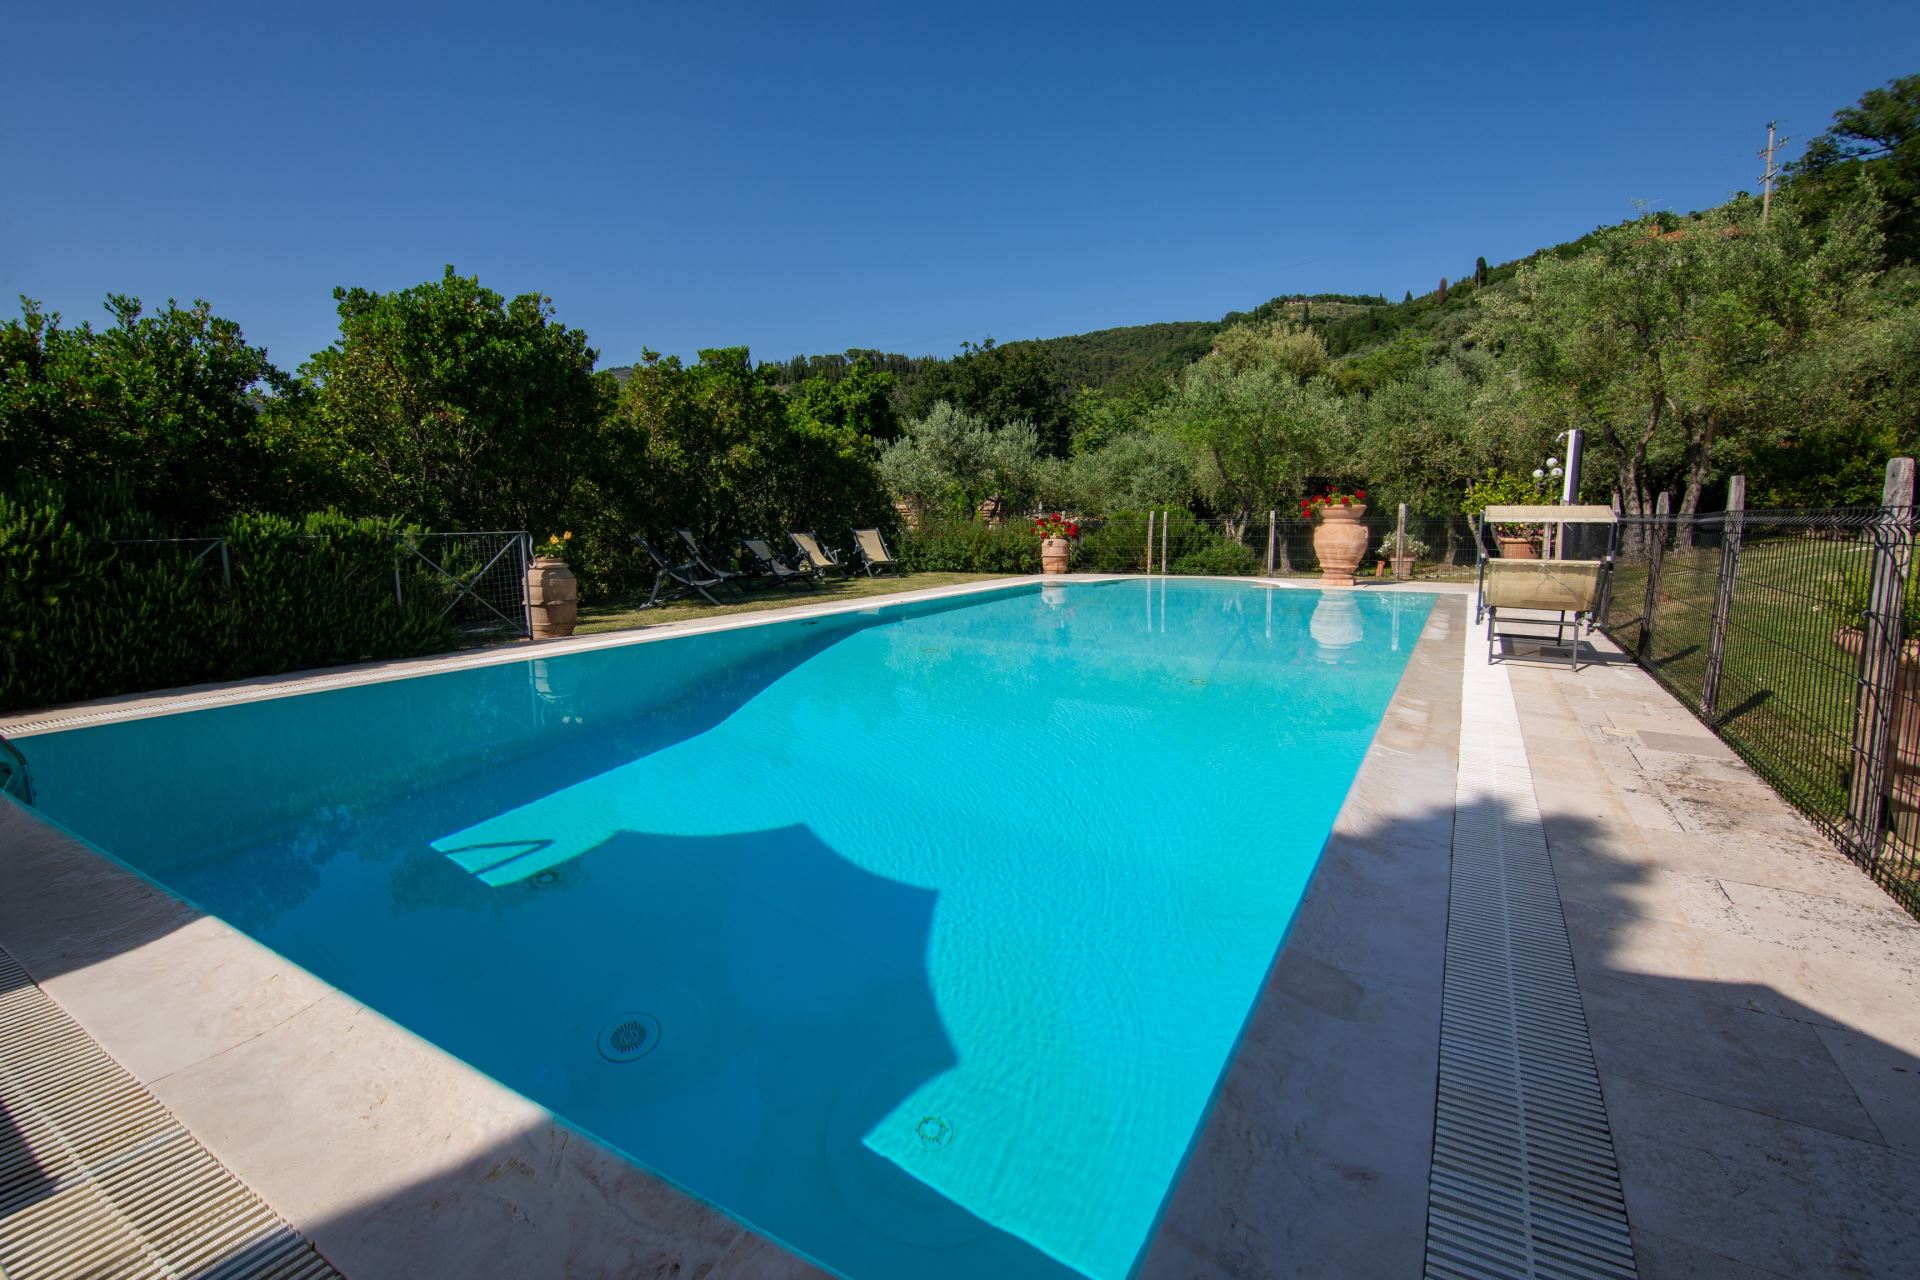 454_4ce45c8_Casa Degli Ulivi, vakantiewoning met omheind prive zwembad, Toscane, Arezzo, villa (5)